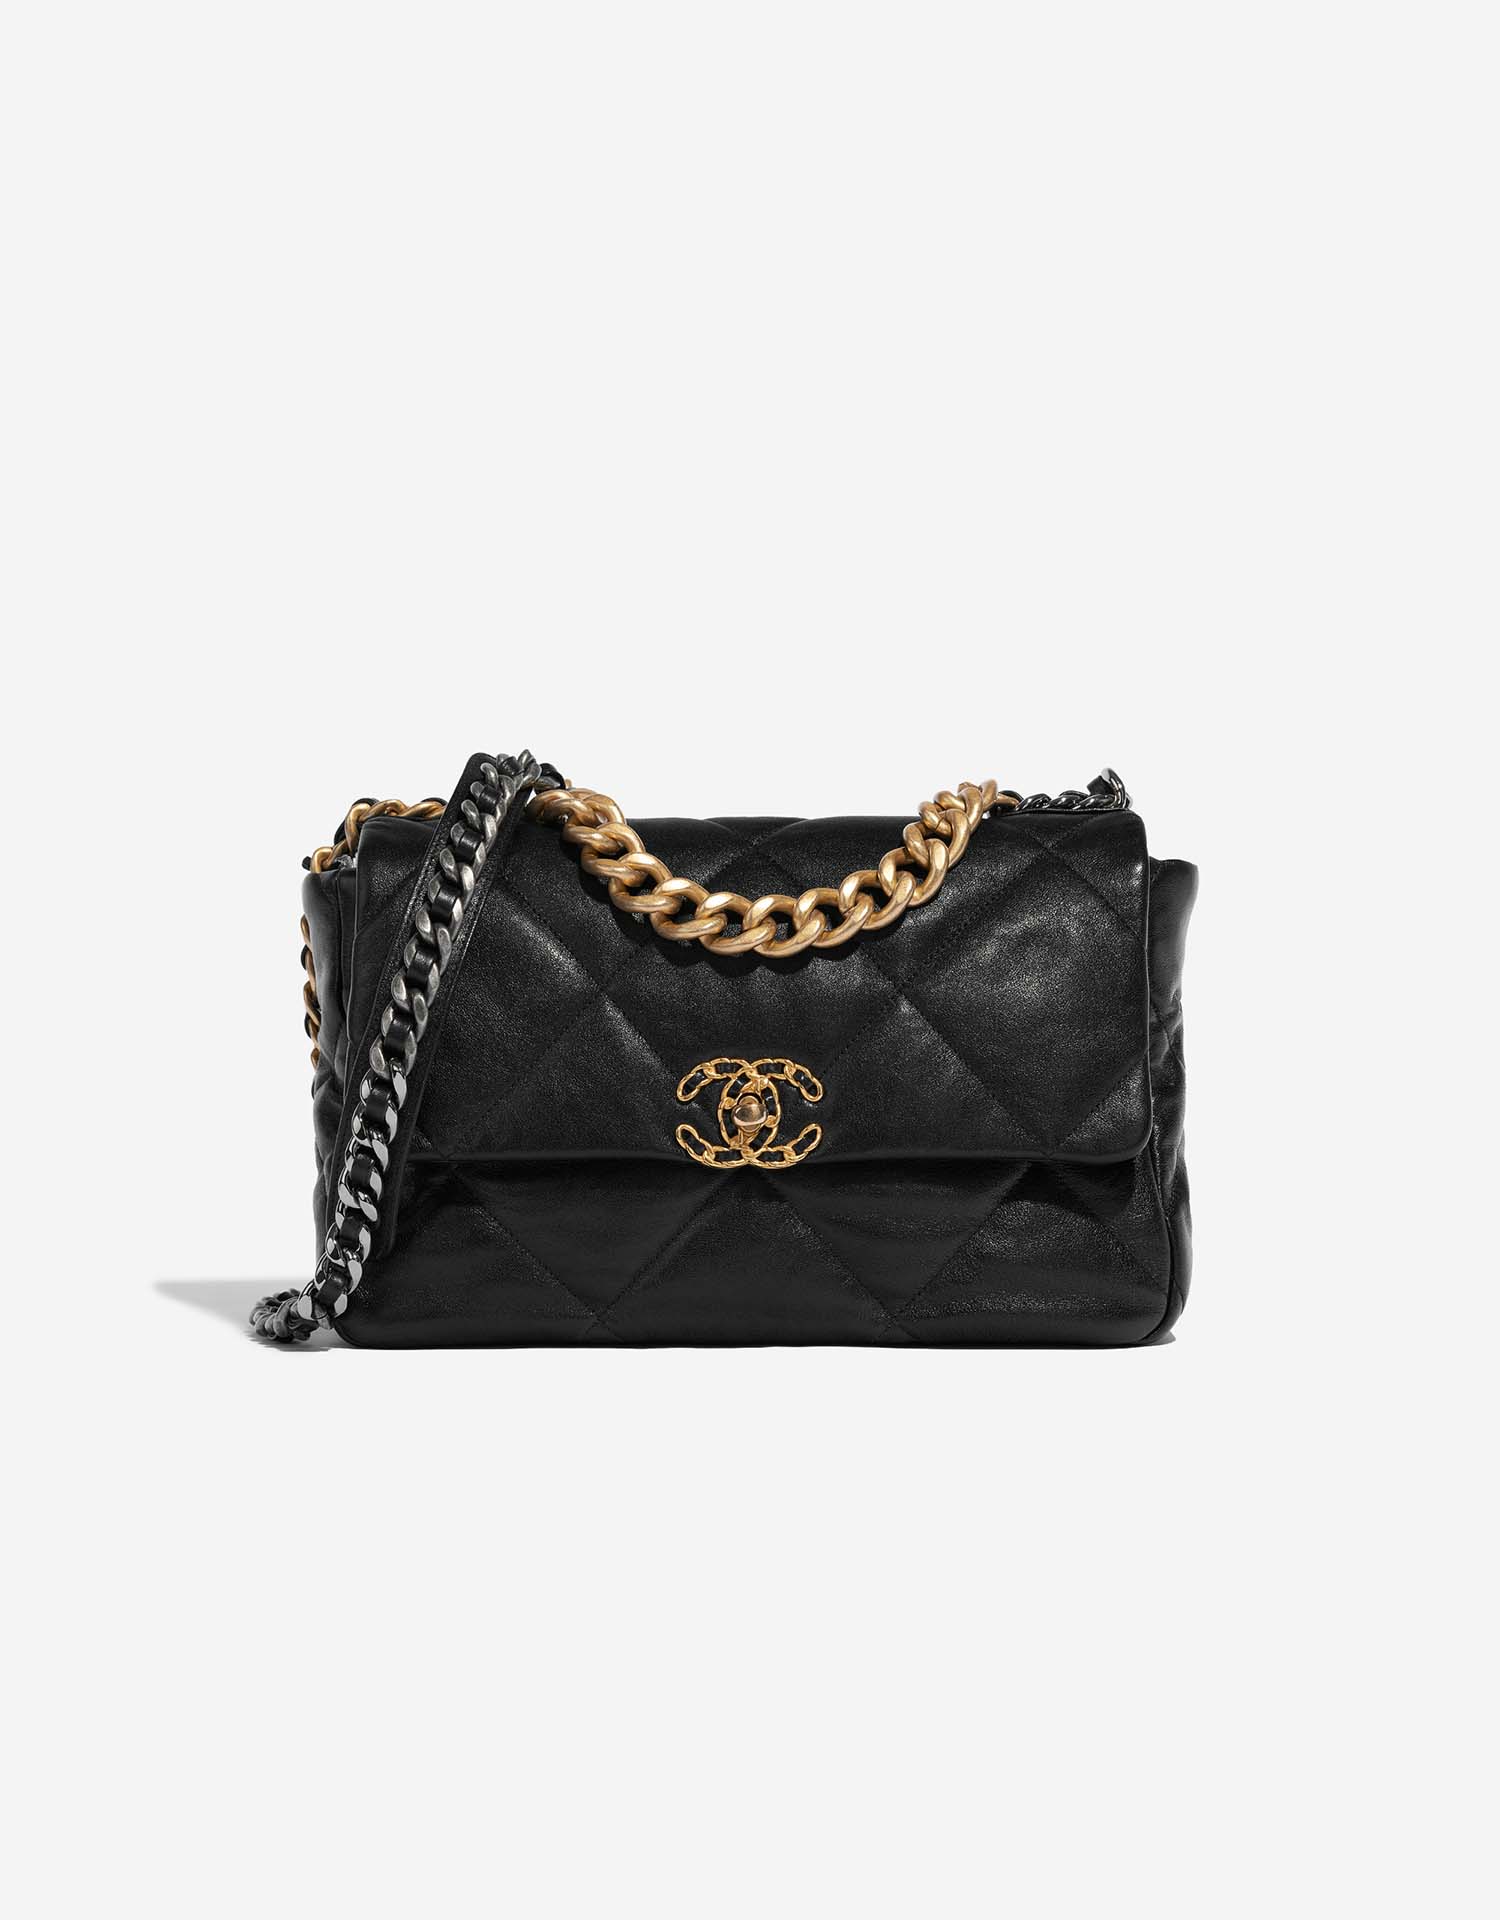 Chanel 19 Flap Bag Large Lamb Black | SACLÀB